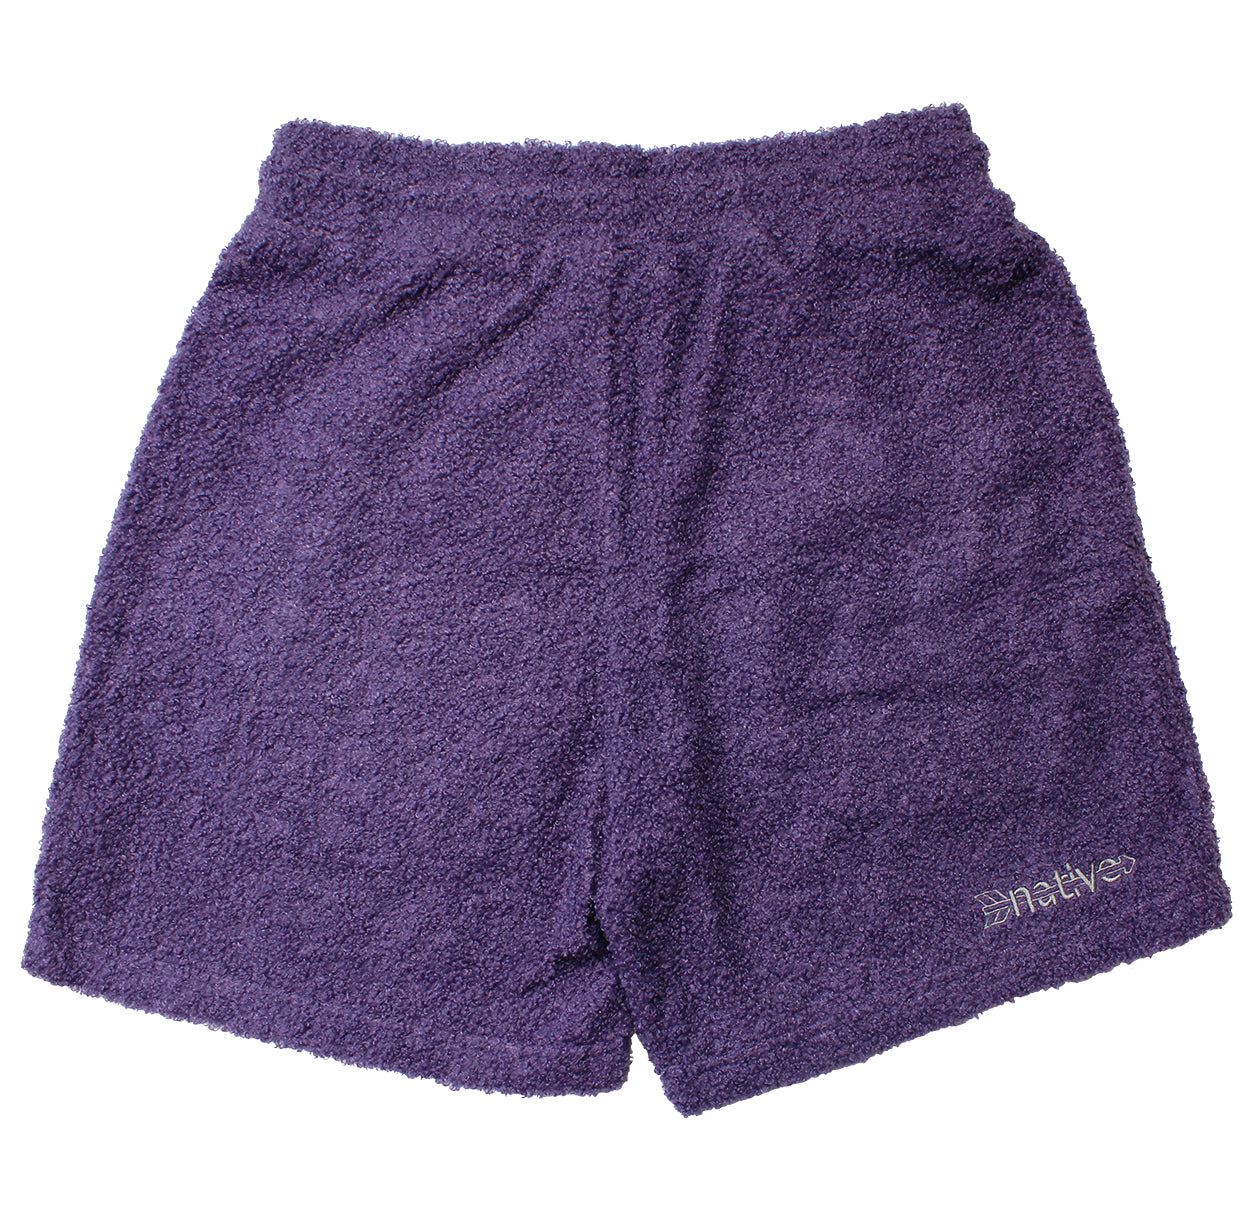 sherpa shorts in midnight purple